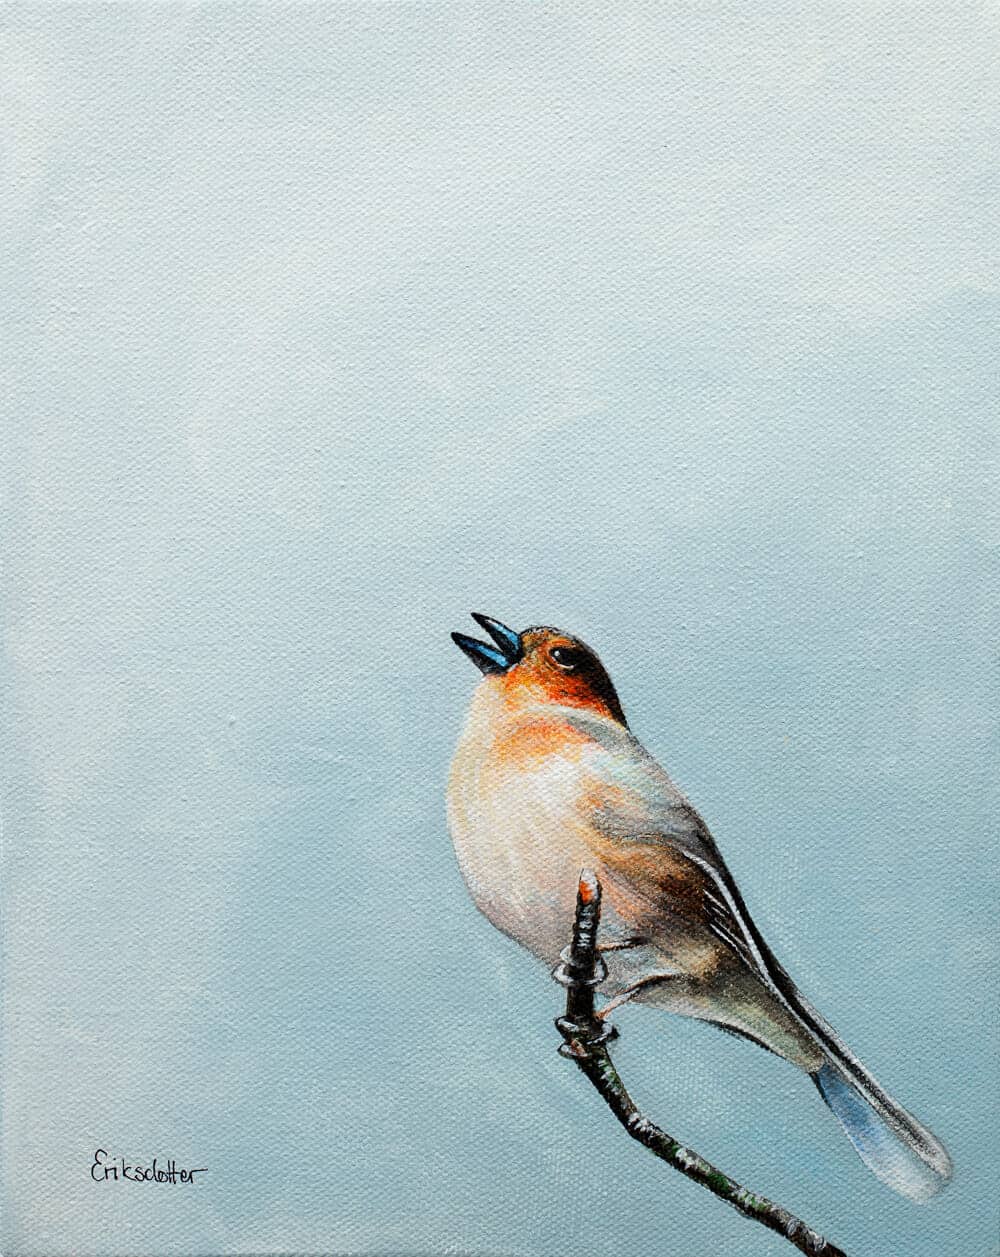 Scottish Songbird - Spring Art Auction 2013, front